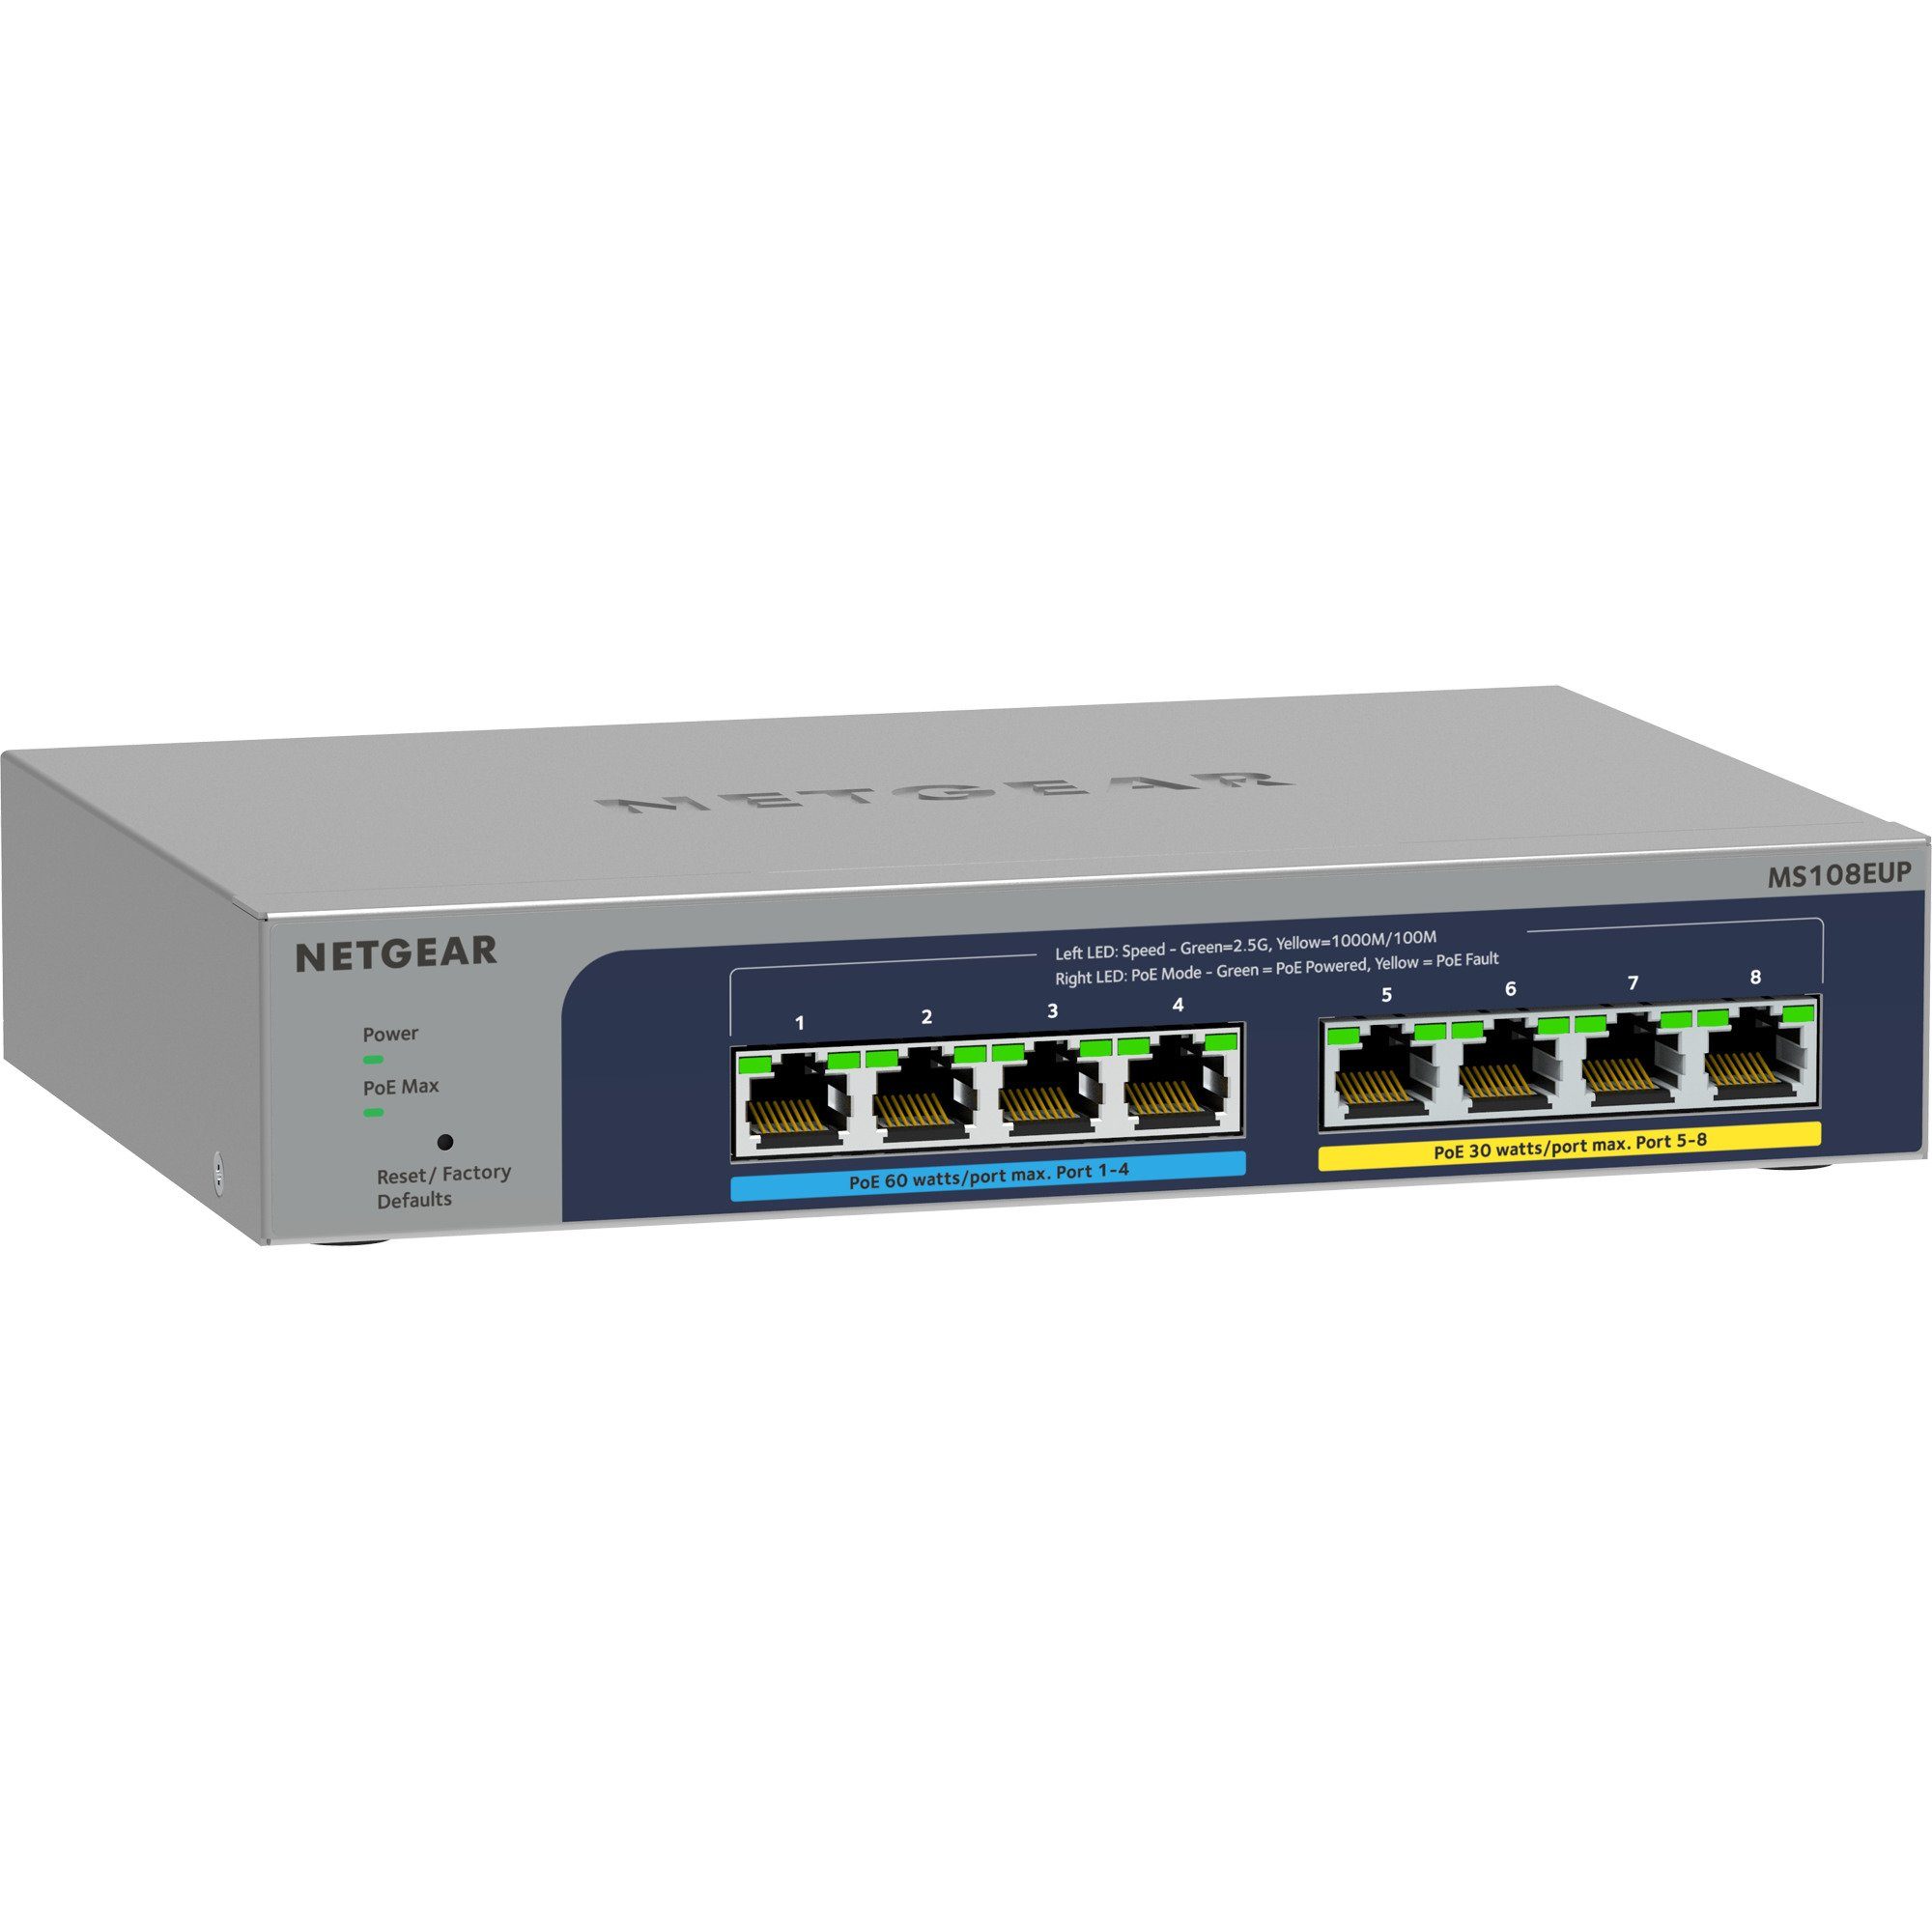 NETGEAR Netgear MS108EUP, Switch Netzwerk-Switch